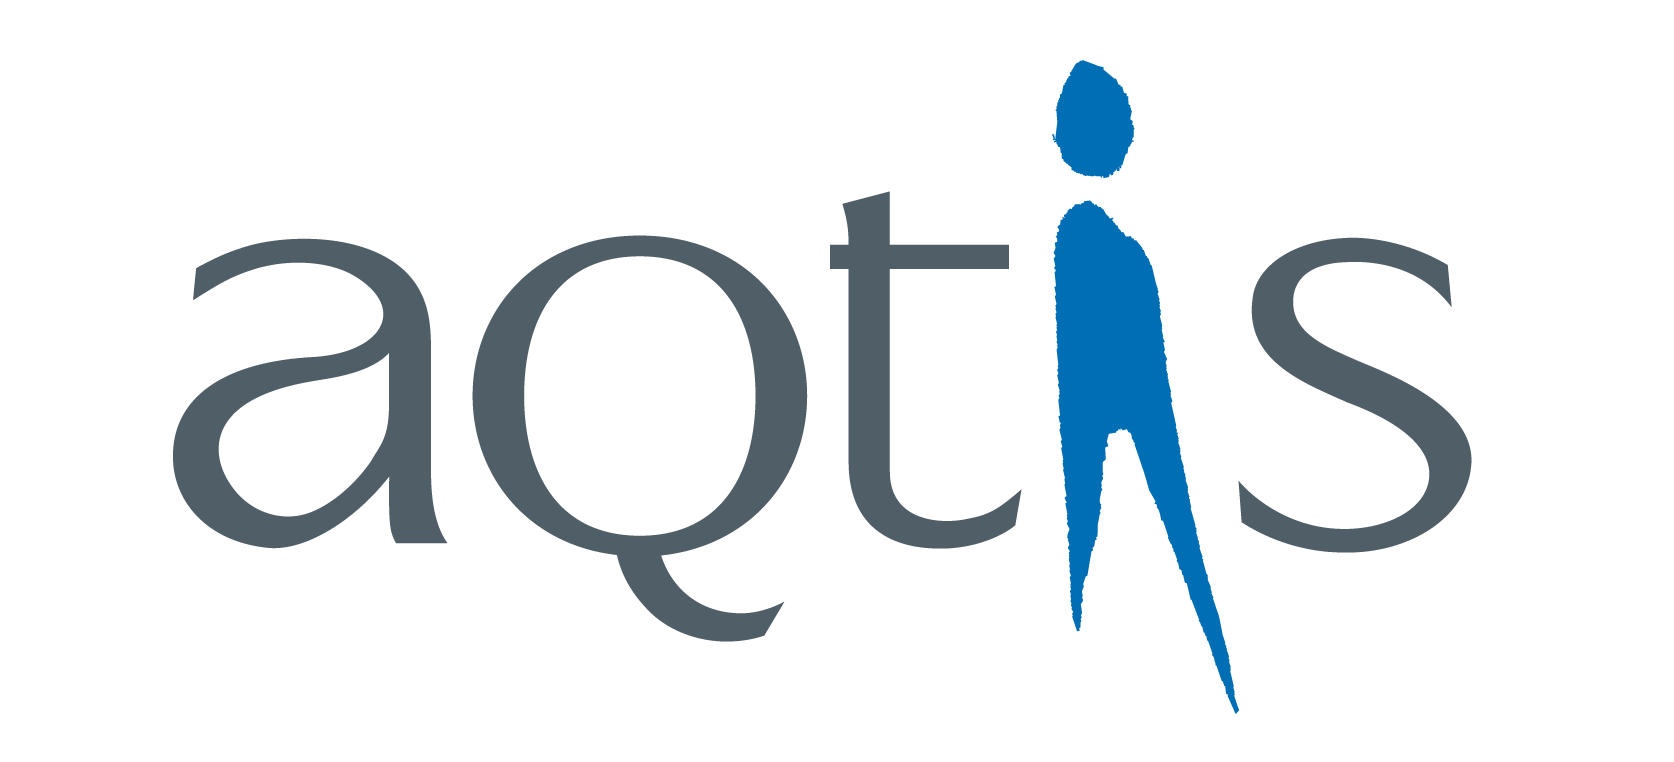 Logo AQTIS